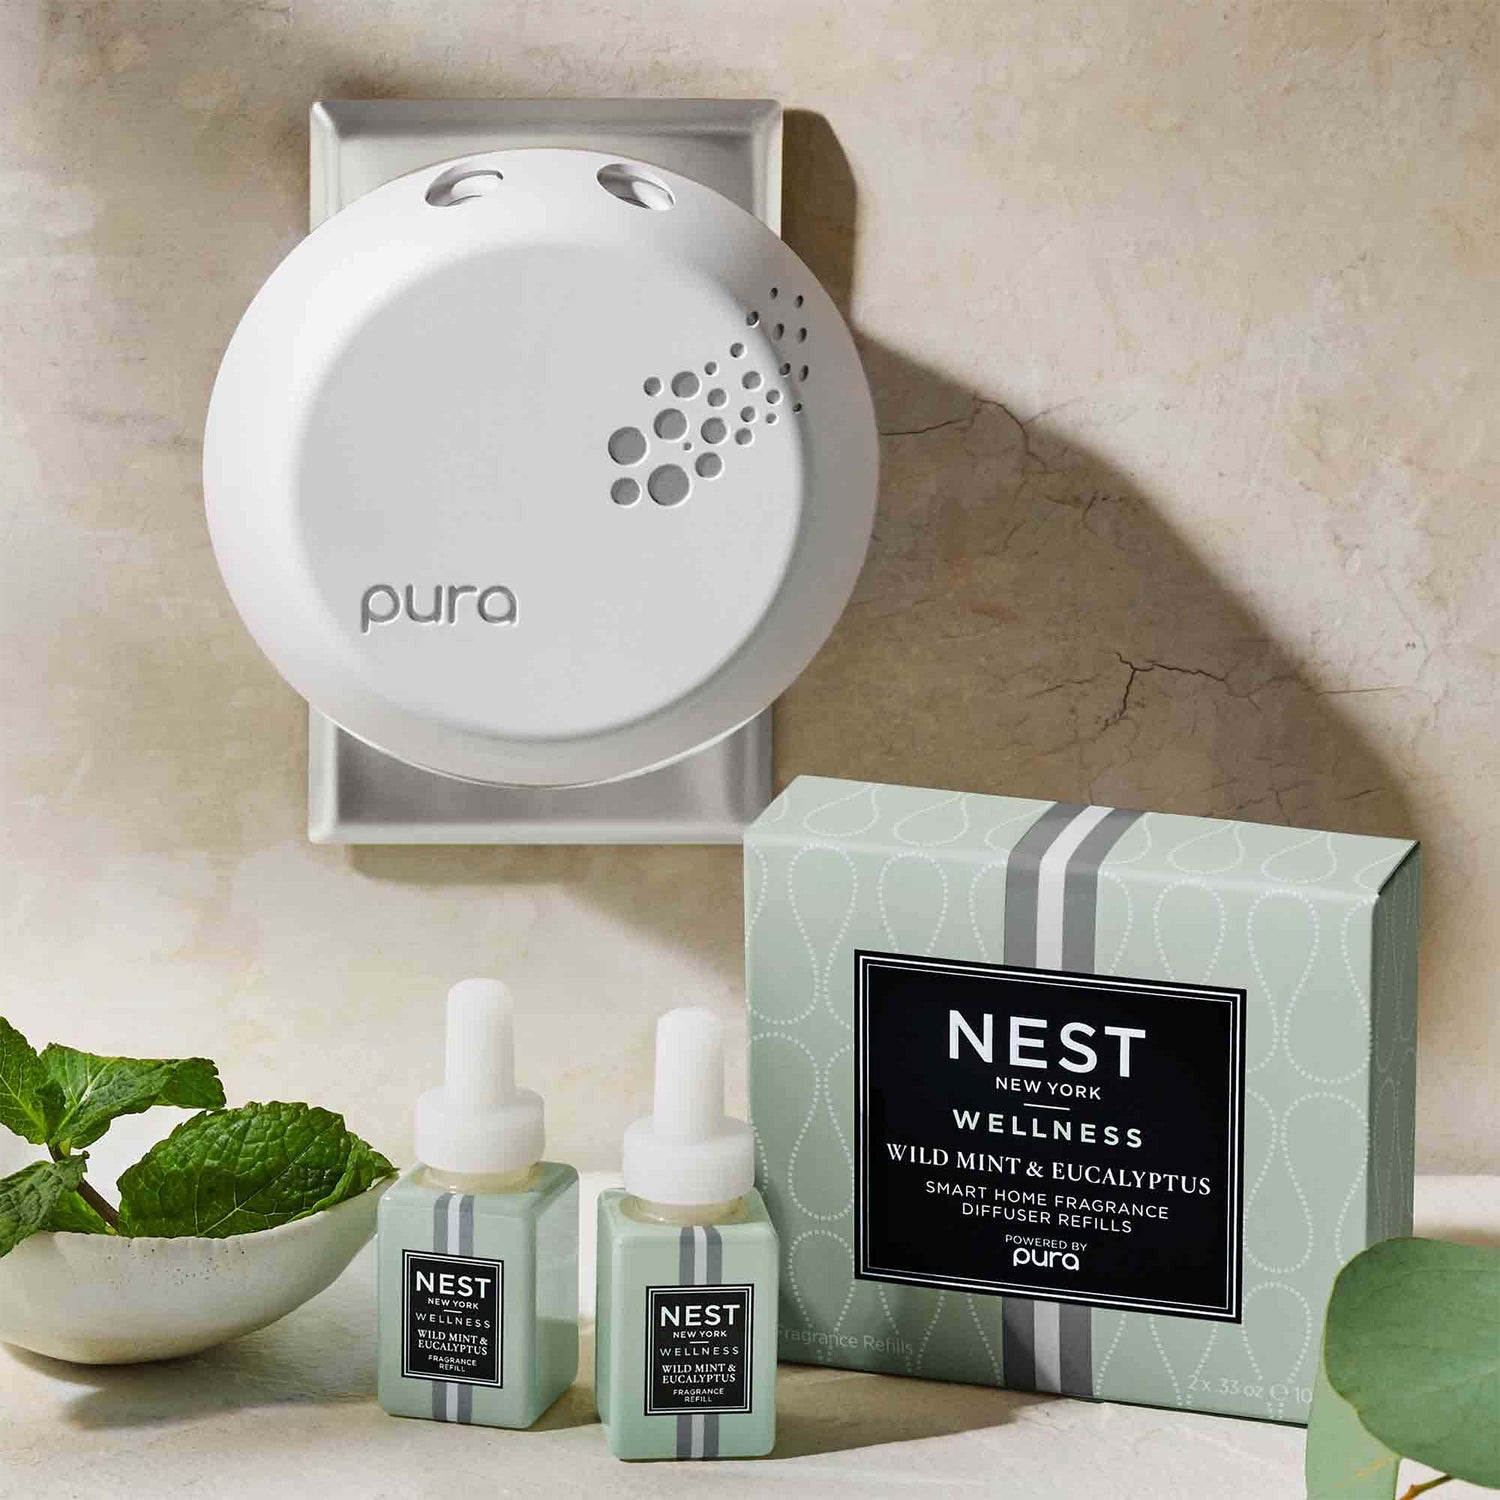 Pura Wild Mint & Eucalyptus Refill Duo Smart Home Fragrance Diffuser